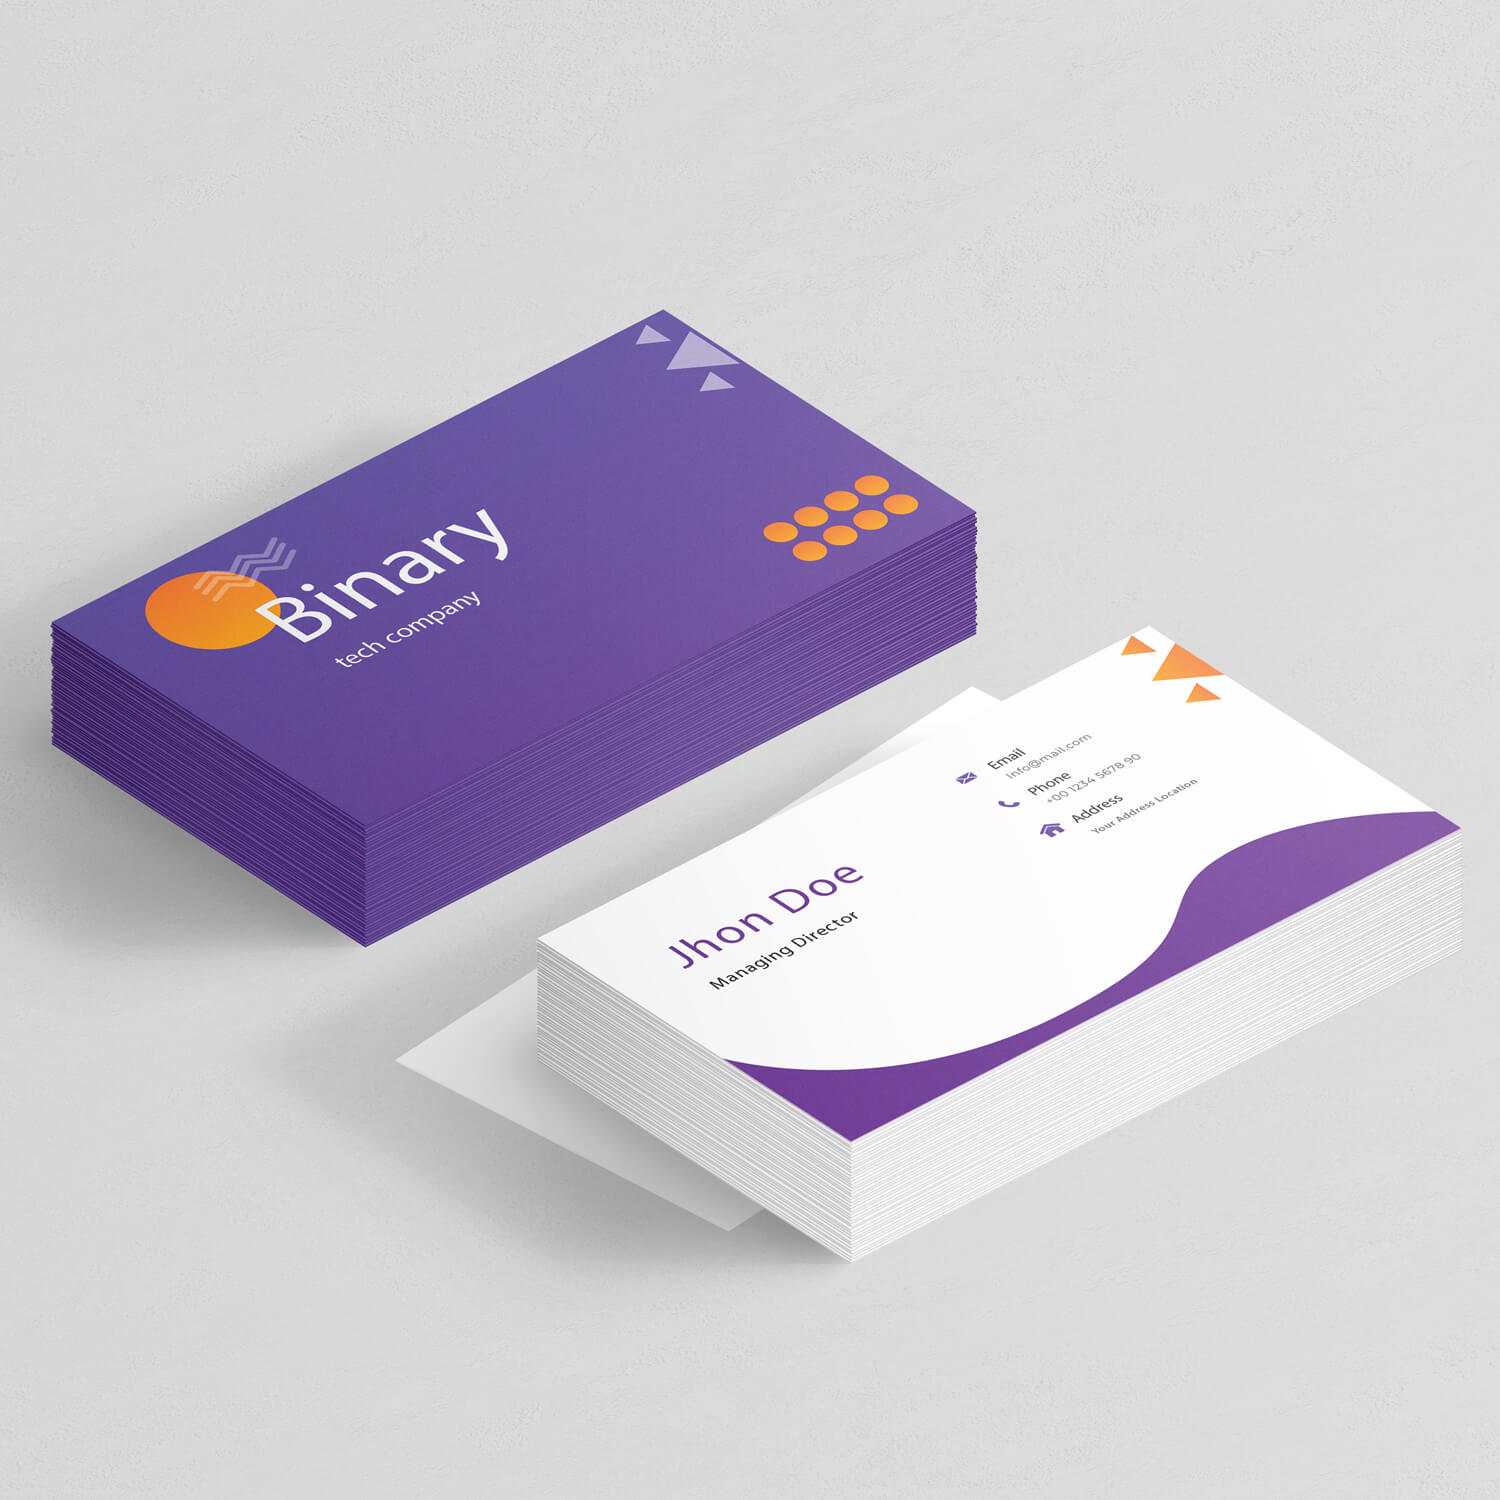 Jhon – Business Card design